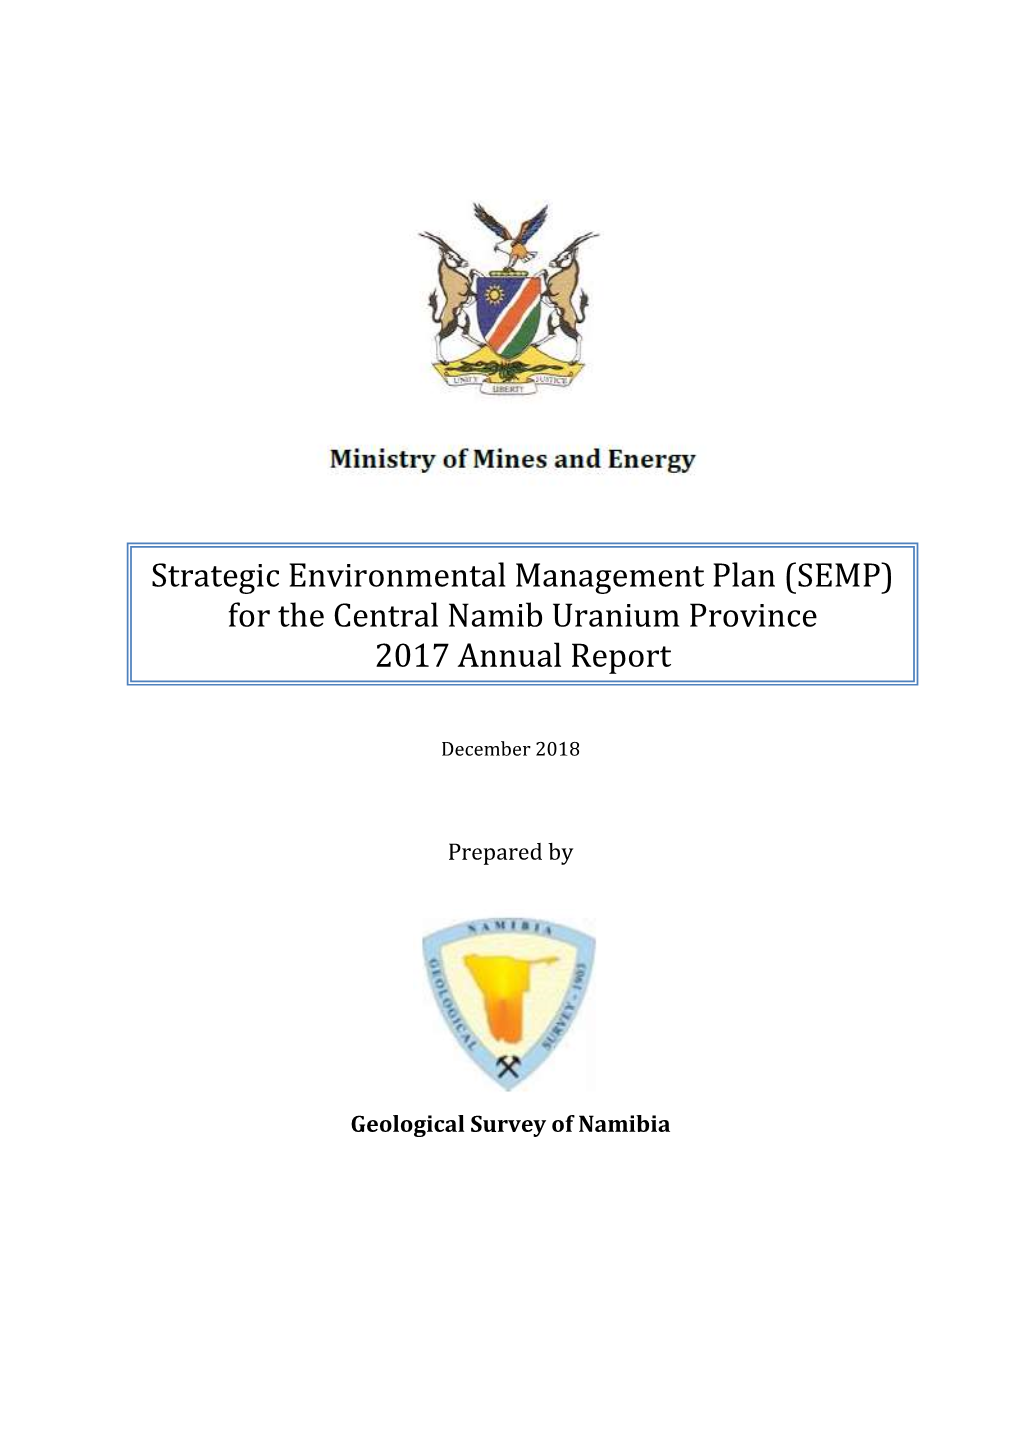 Strategic Environmental Management Plan (SEMP) for the Central Namib Uranium Province 2017 Annual Report